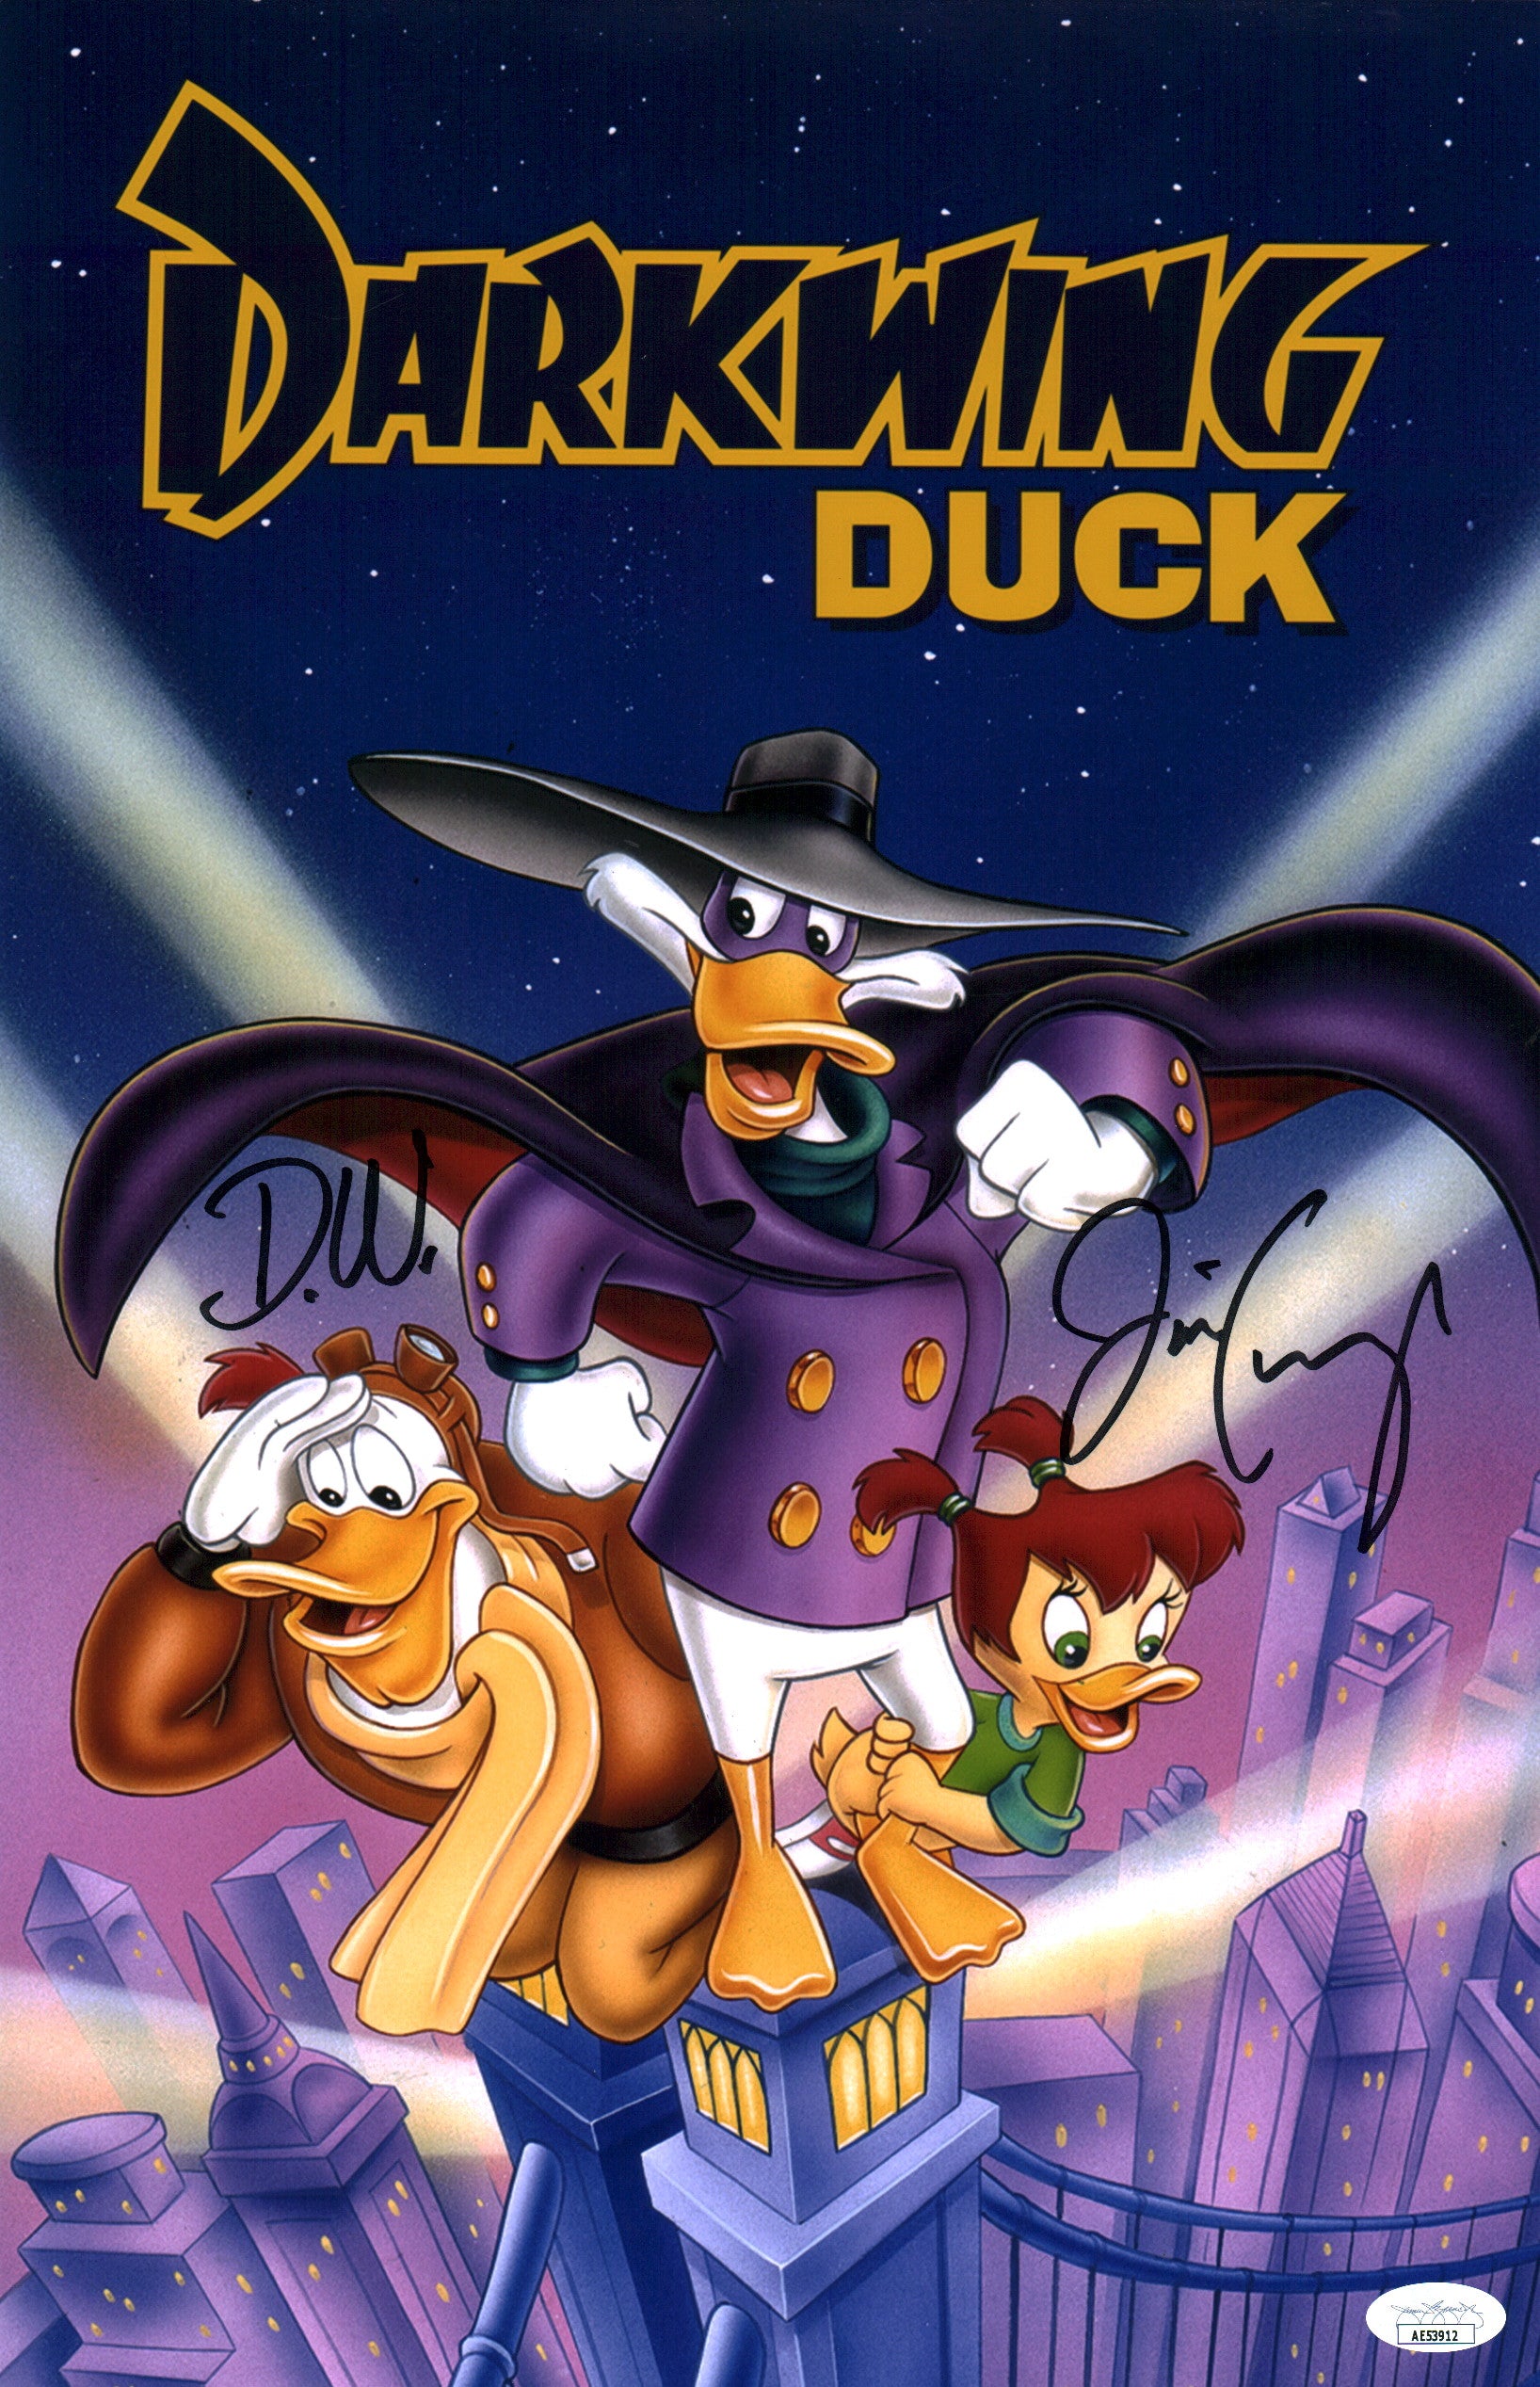 Jim Cummings Darkwing Duck 11x17 Signed Photo Poster JSA COA Certified Autograph